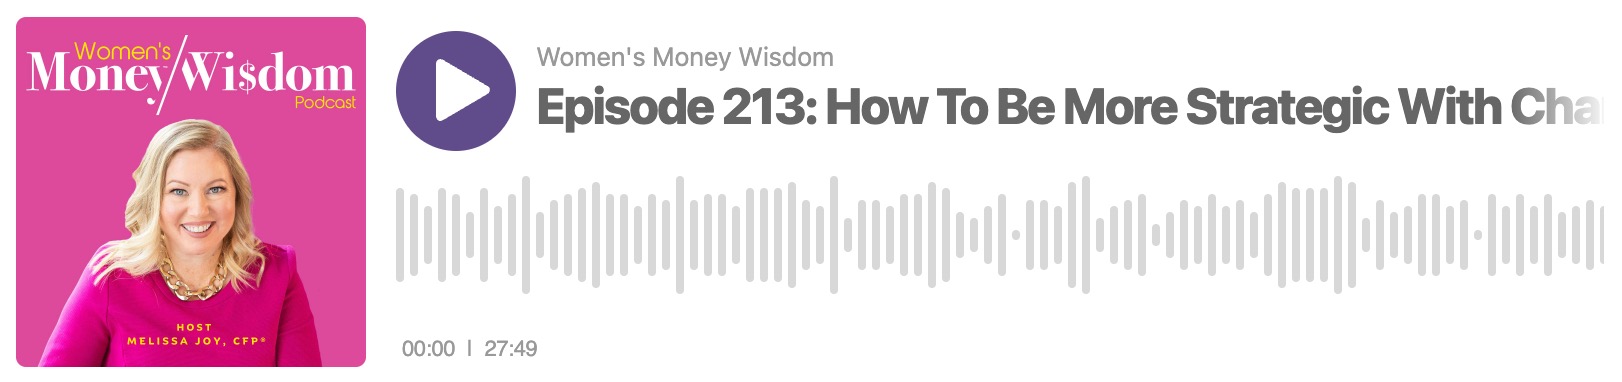 Women's Money Wisdom Episode 213